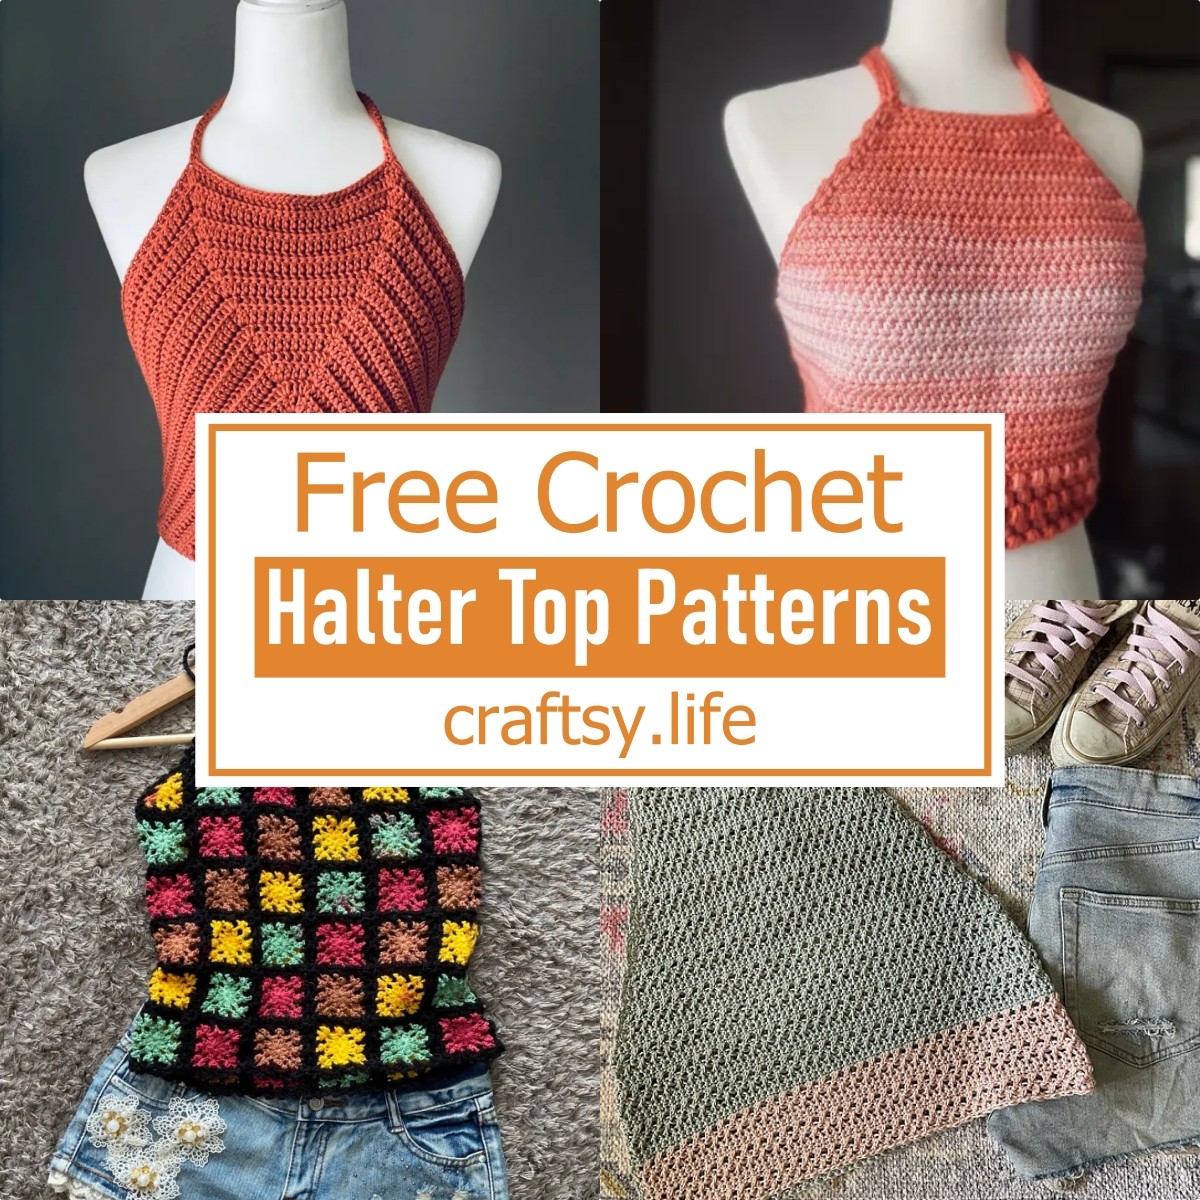 5 Free Crochet Halter Top Patterns